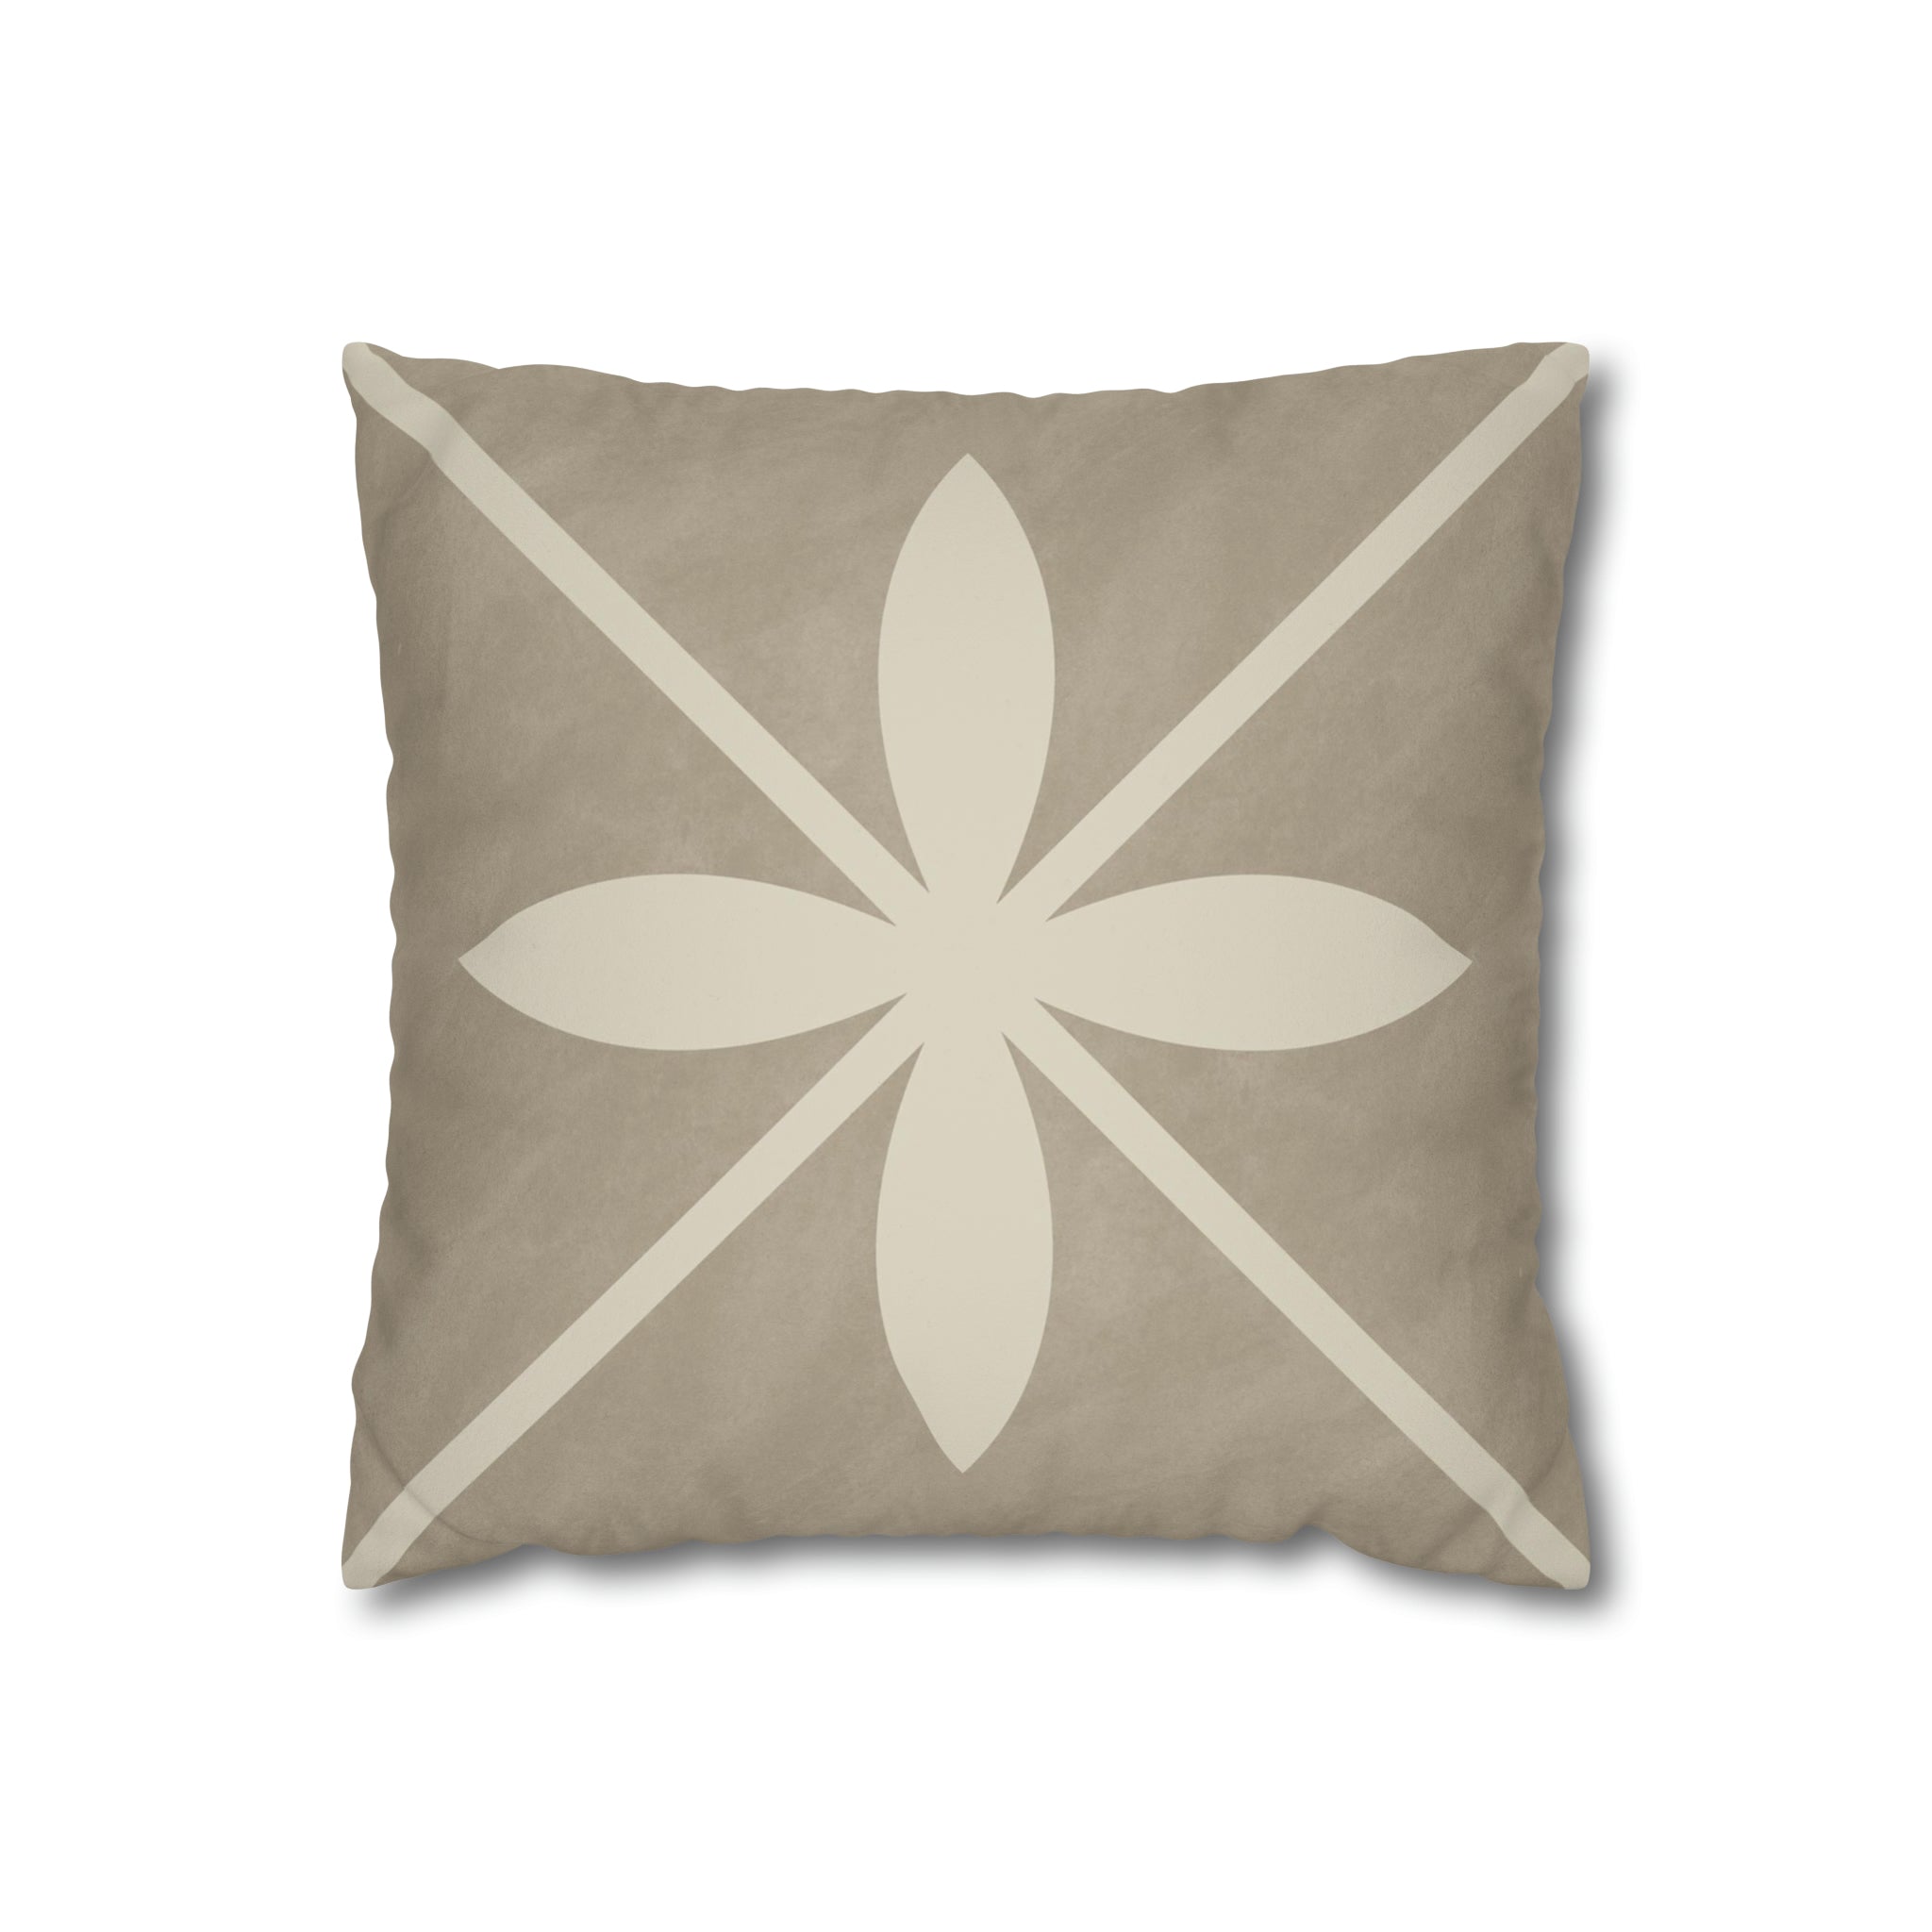 Castelar Cafe Latte Microsuede Square Pillow Cover